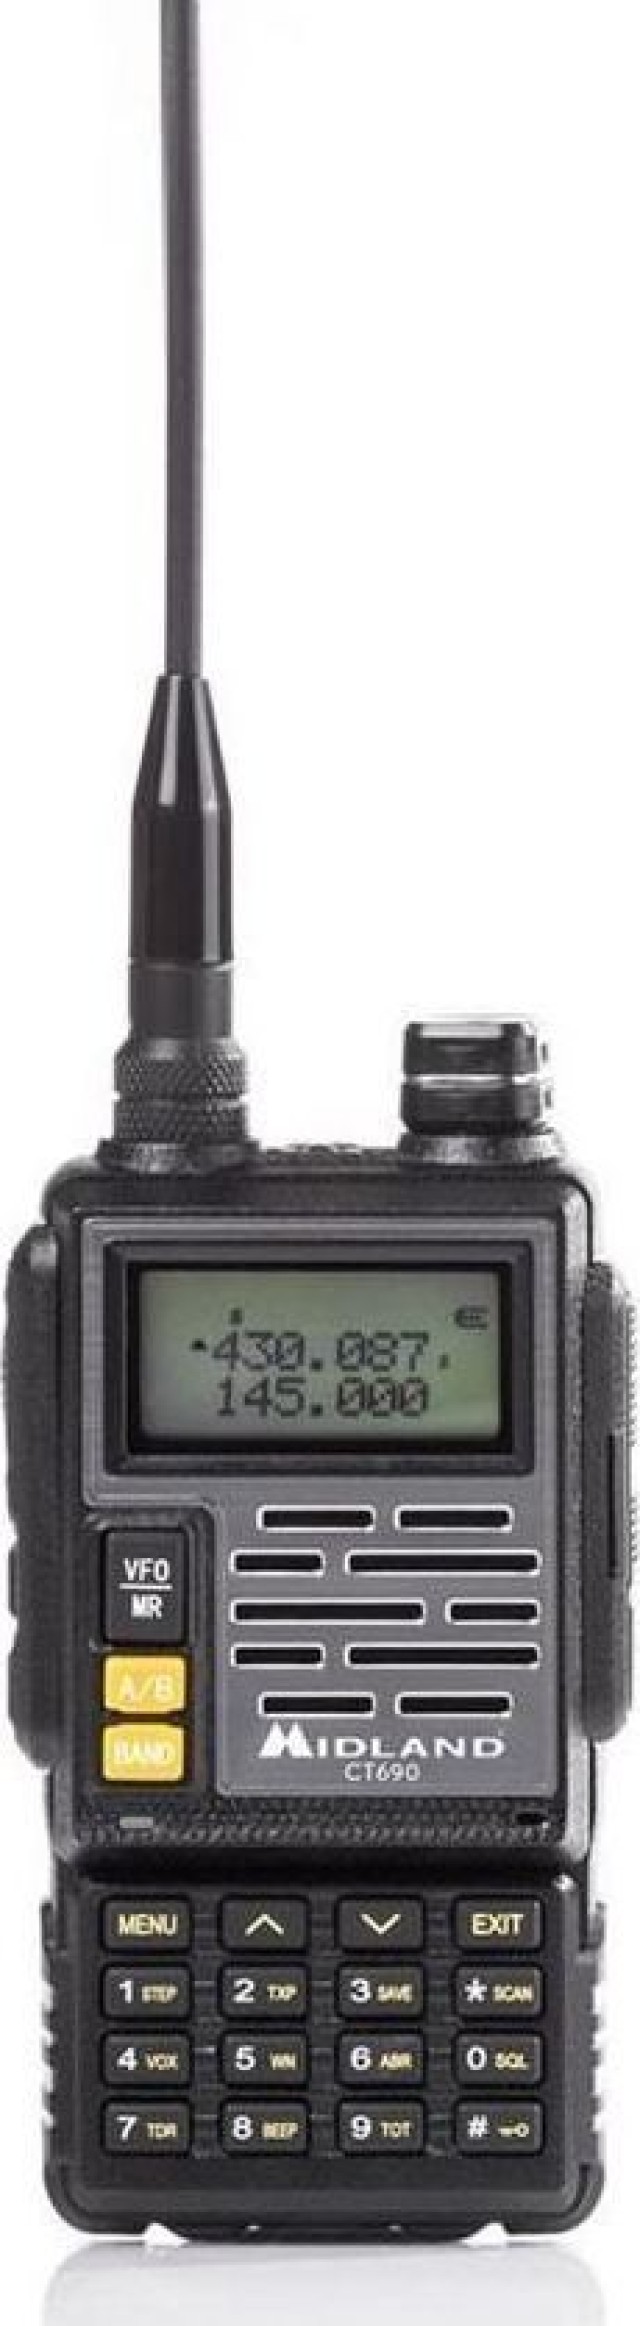 Midland CT-690 Dual Band VHF / UHF Transceiver